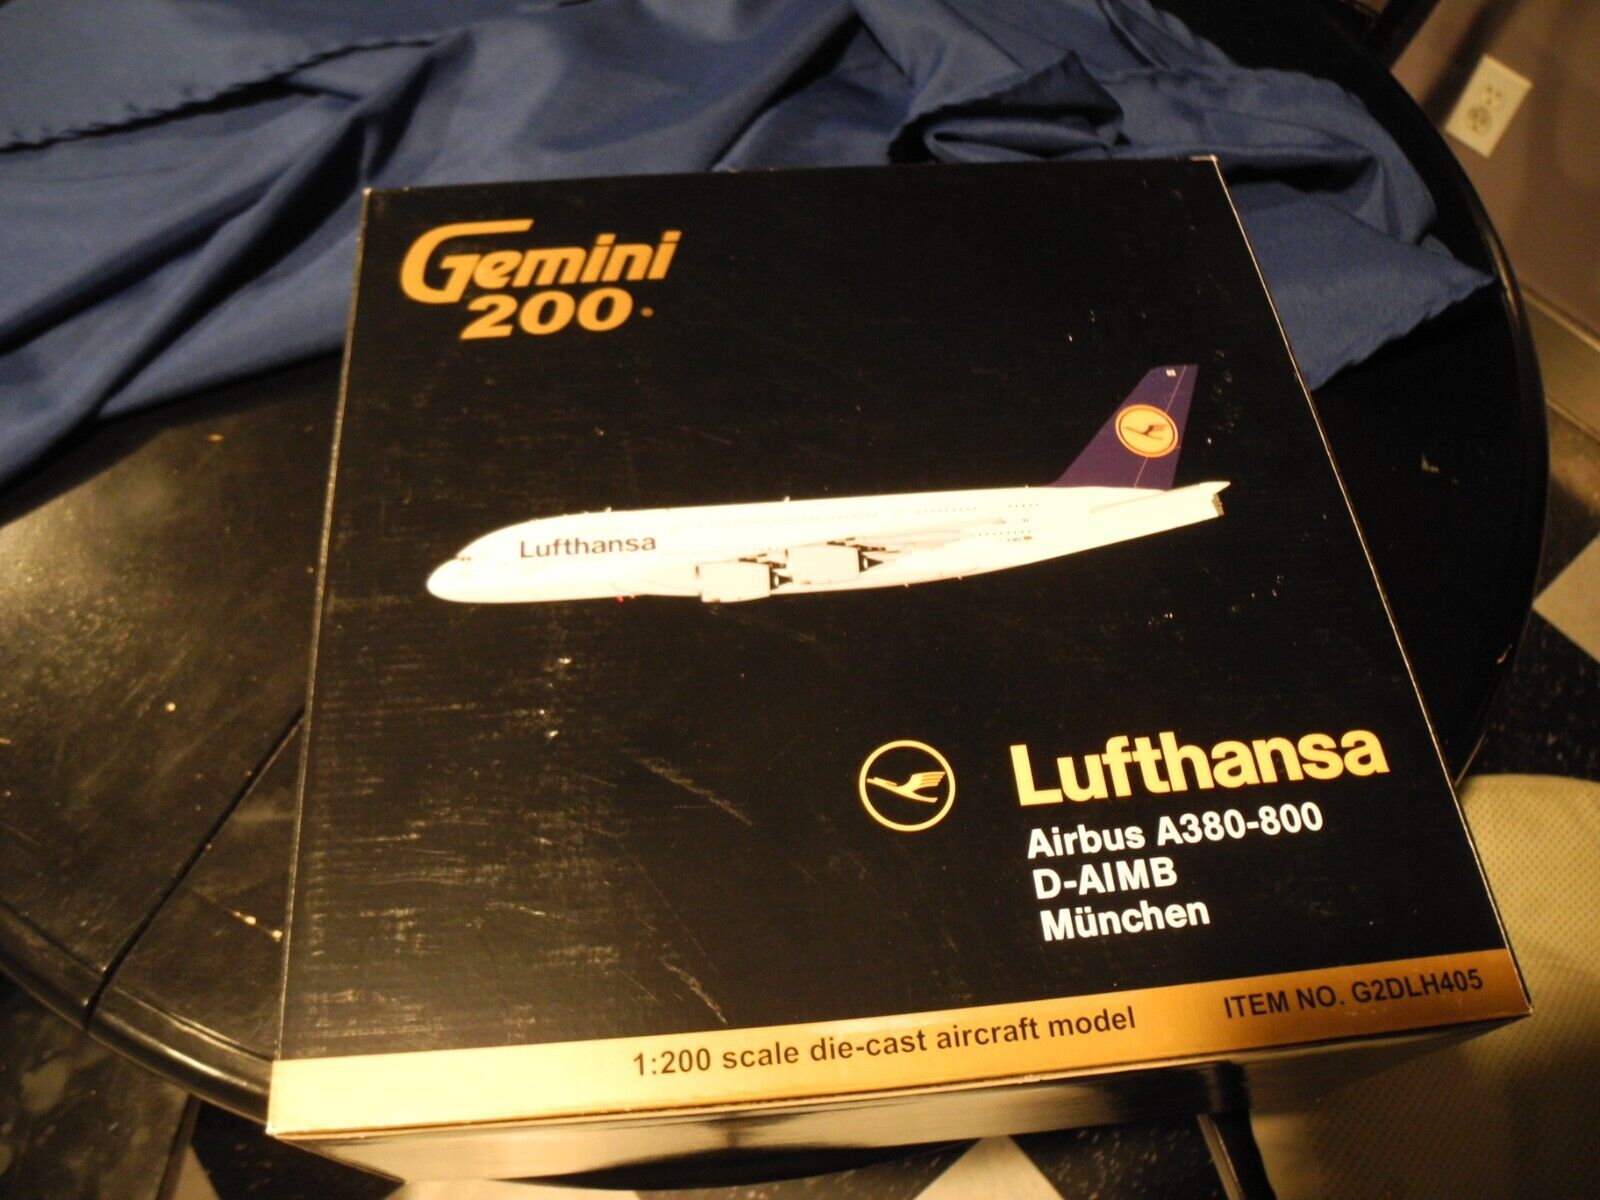 Extremely RARE Lufthansa Airbus A380-800 D-AIMB Gemini 200 1:200, NIB, LAST ONE